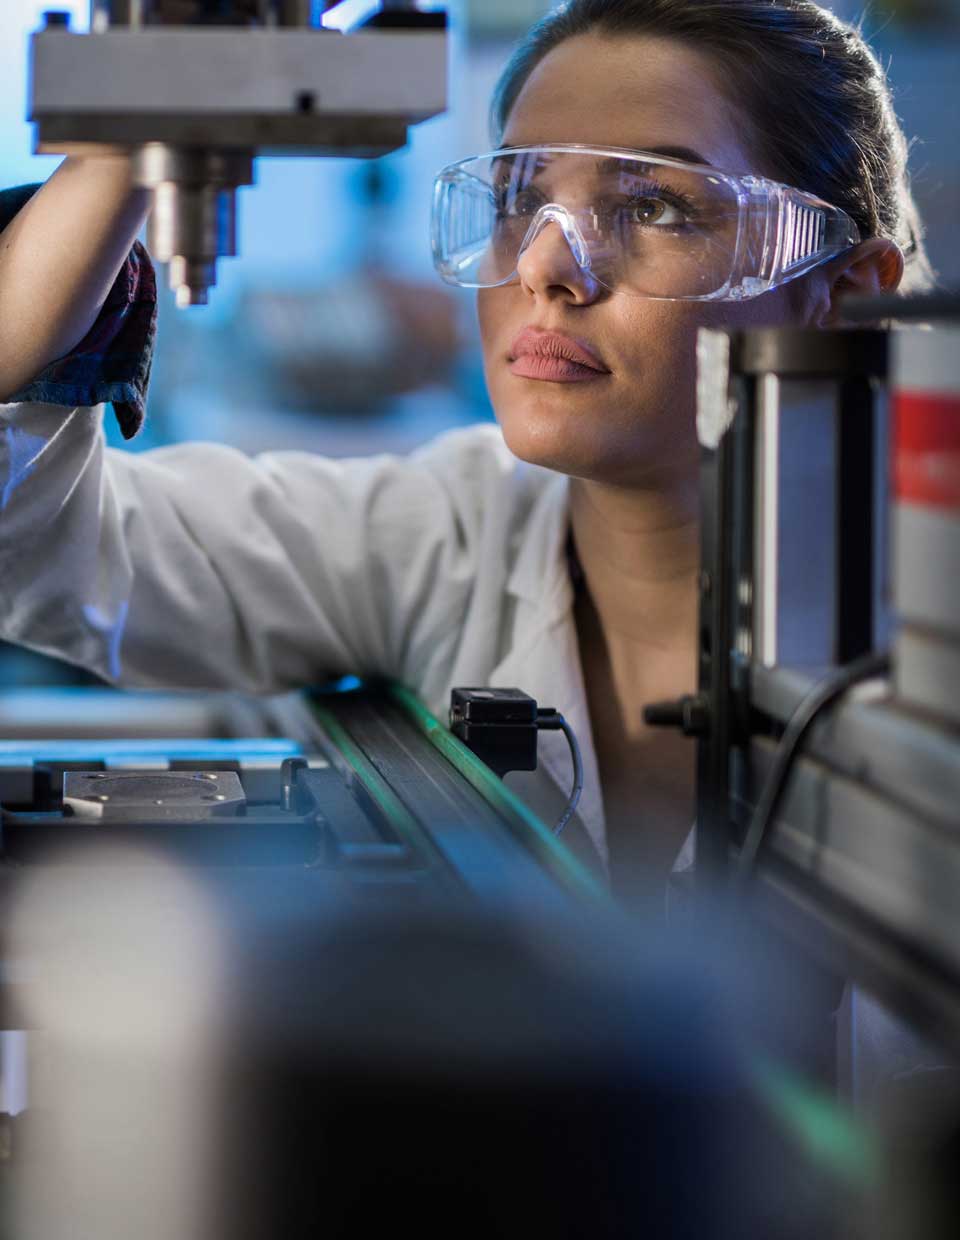 promo image for lab employee using scientific equipment